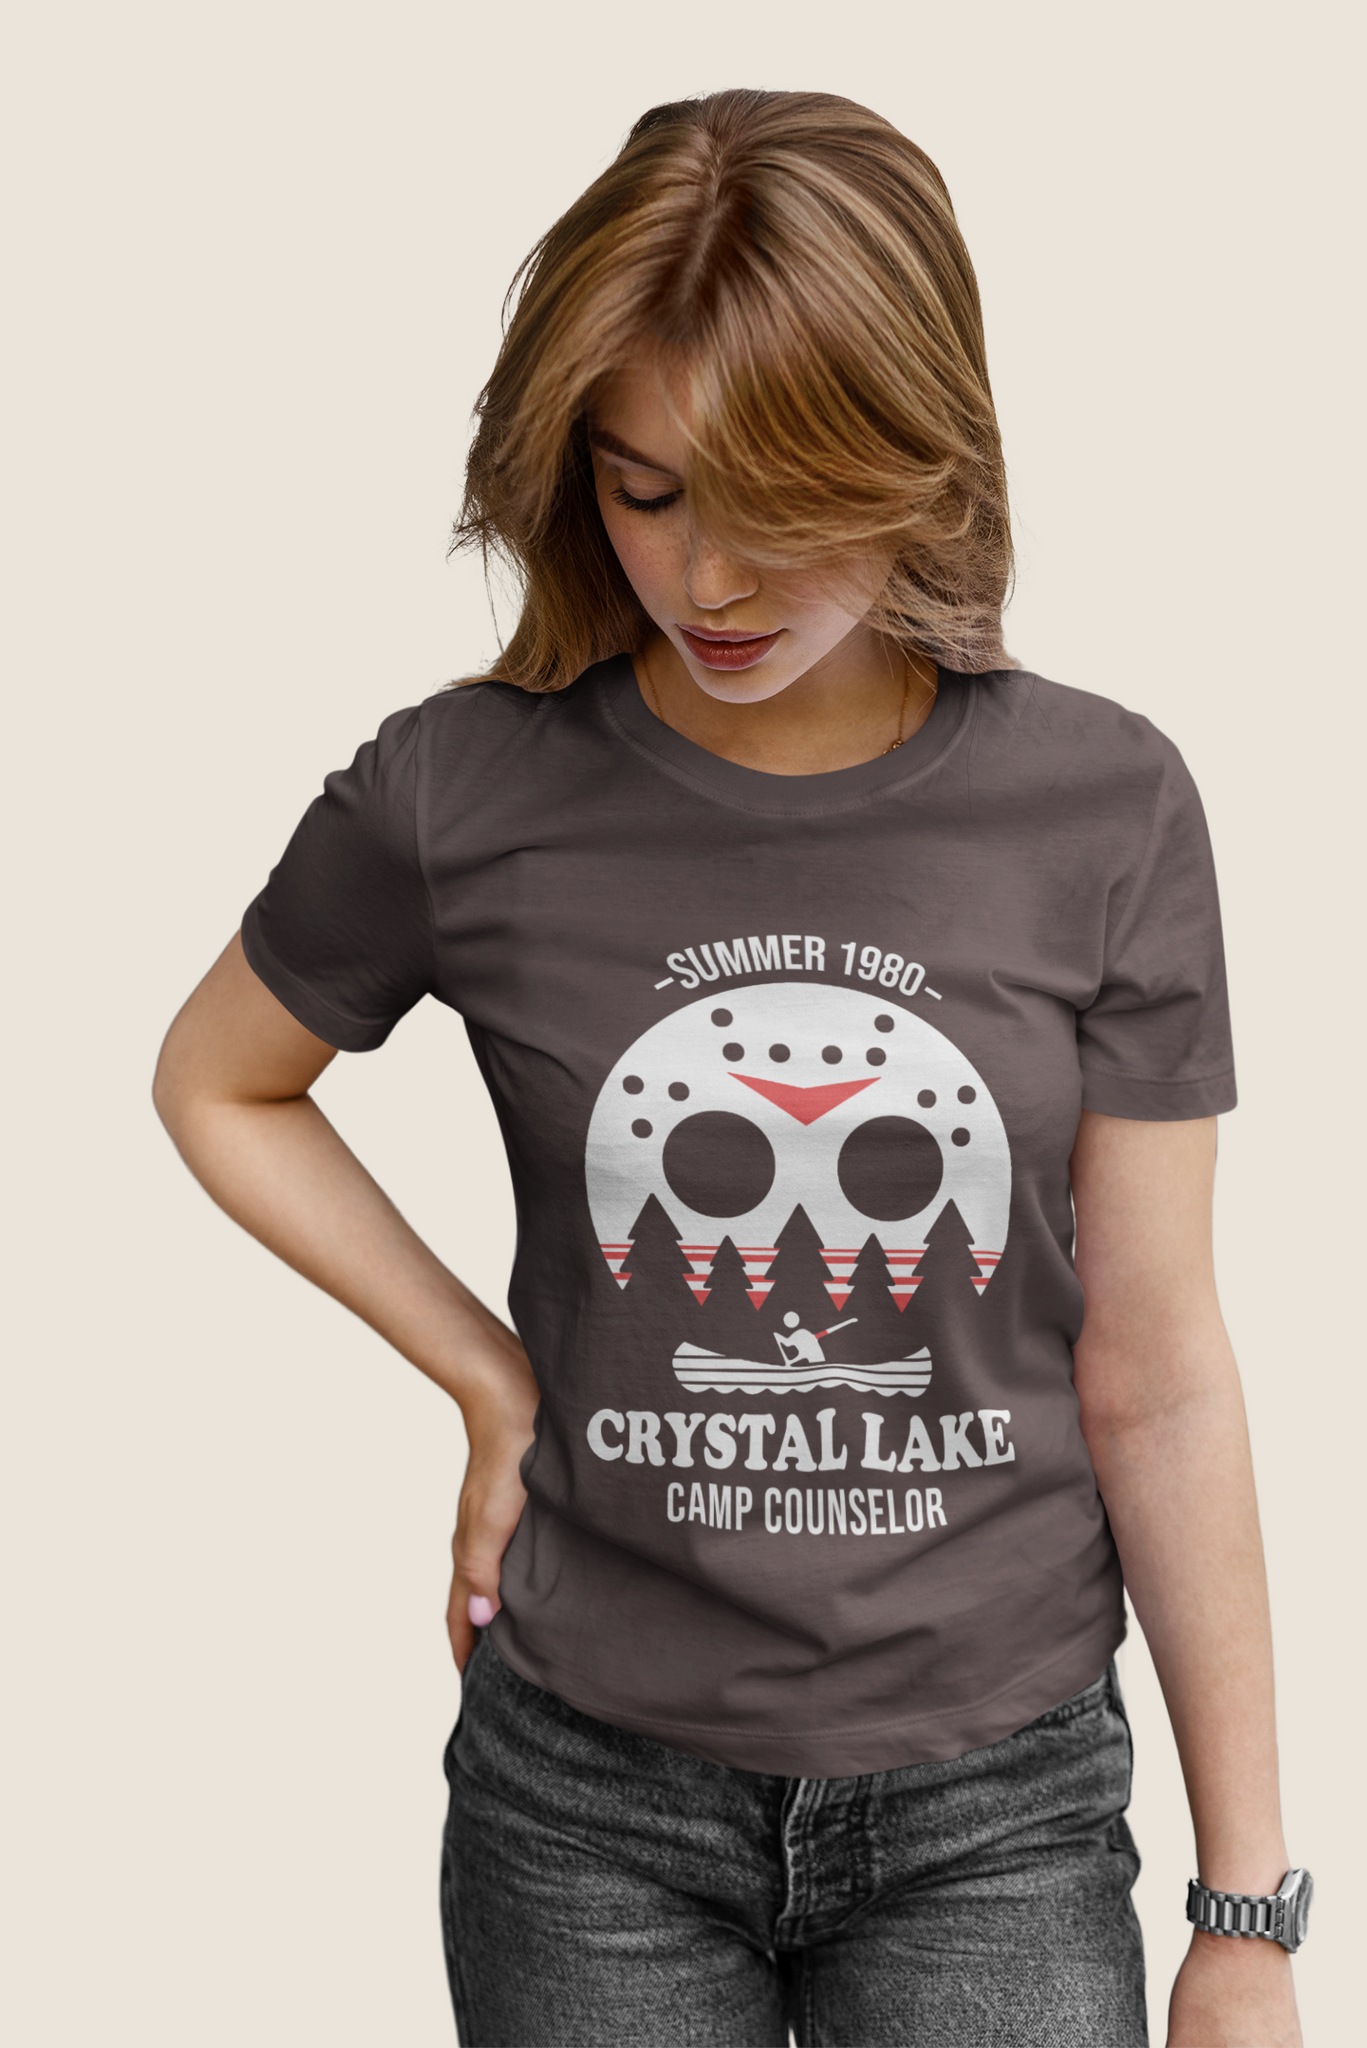 Friday 13th T Shirt, Jason Voorhees T Shirt, Summer 1980 Crystal Lake Camp Counselor Tshirt, Halloween Gifts